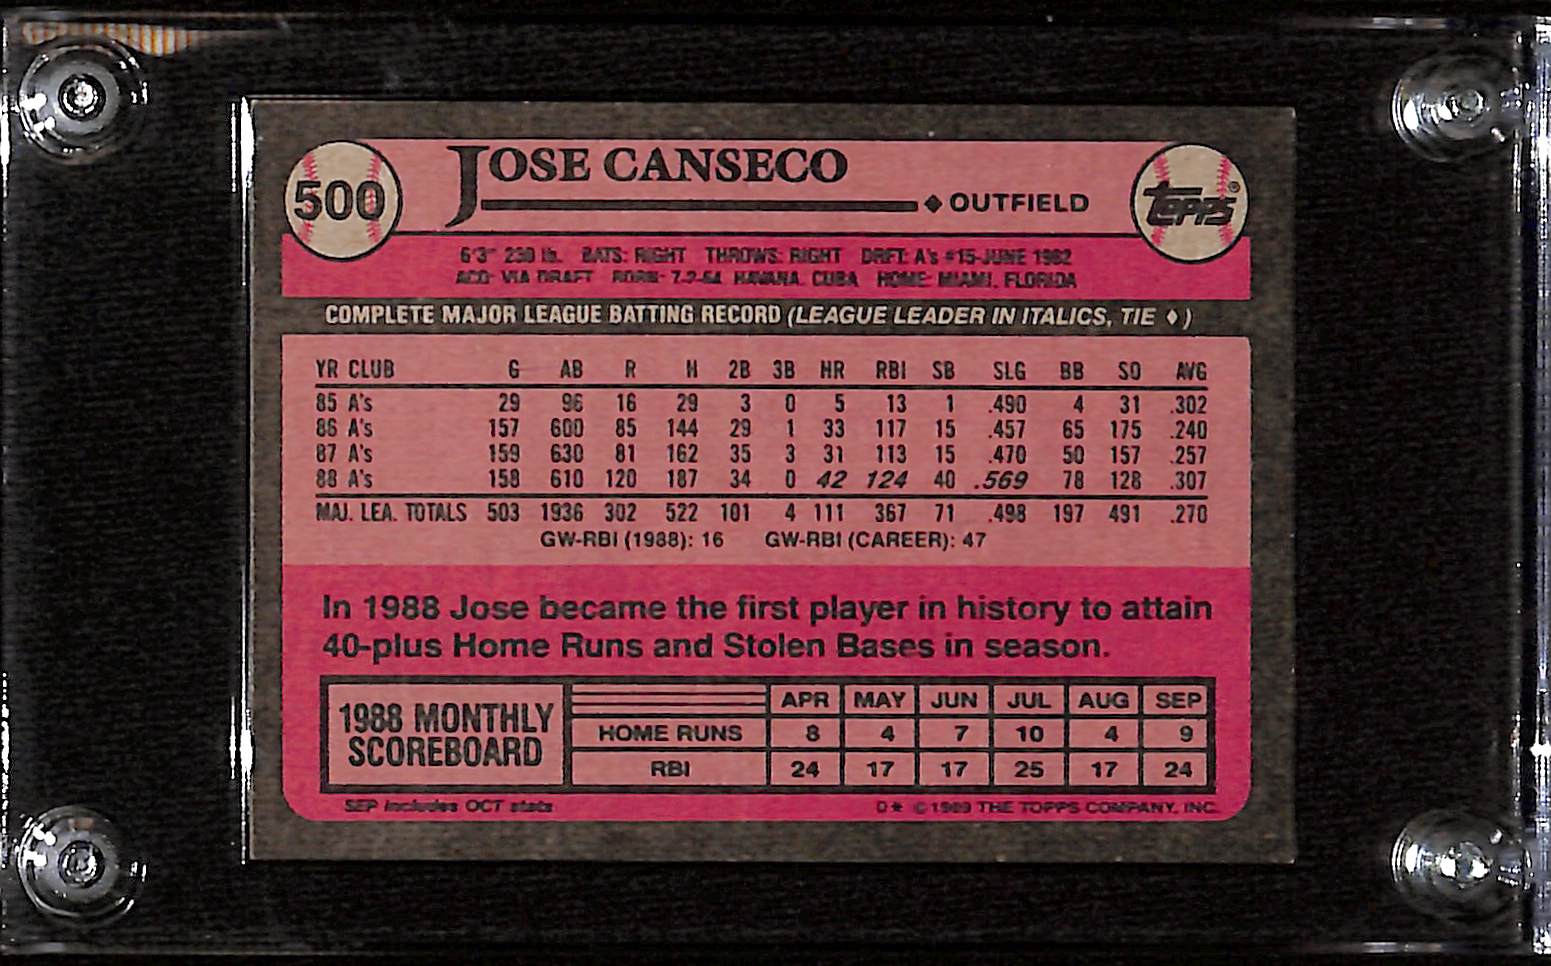 FIINR Baseball Card 1989 Topps Jose Canseco Baseball Error Card #500 - Mint Condition Error Card